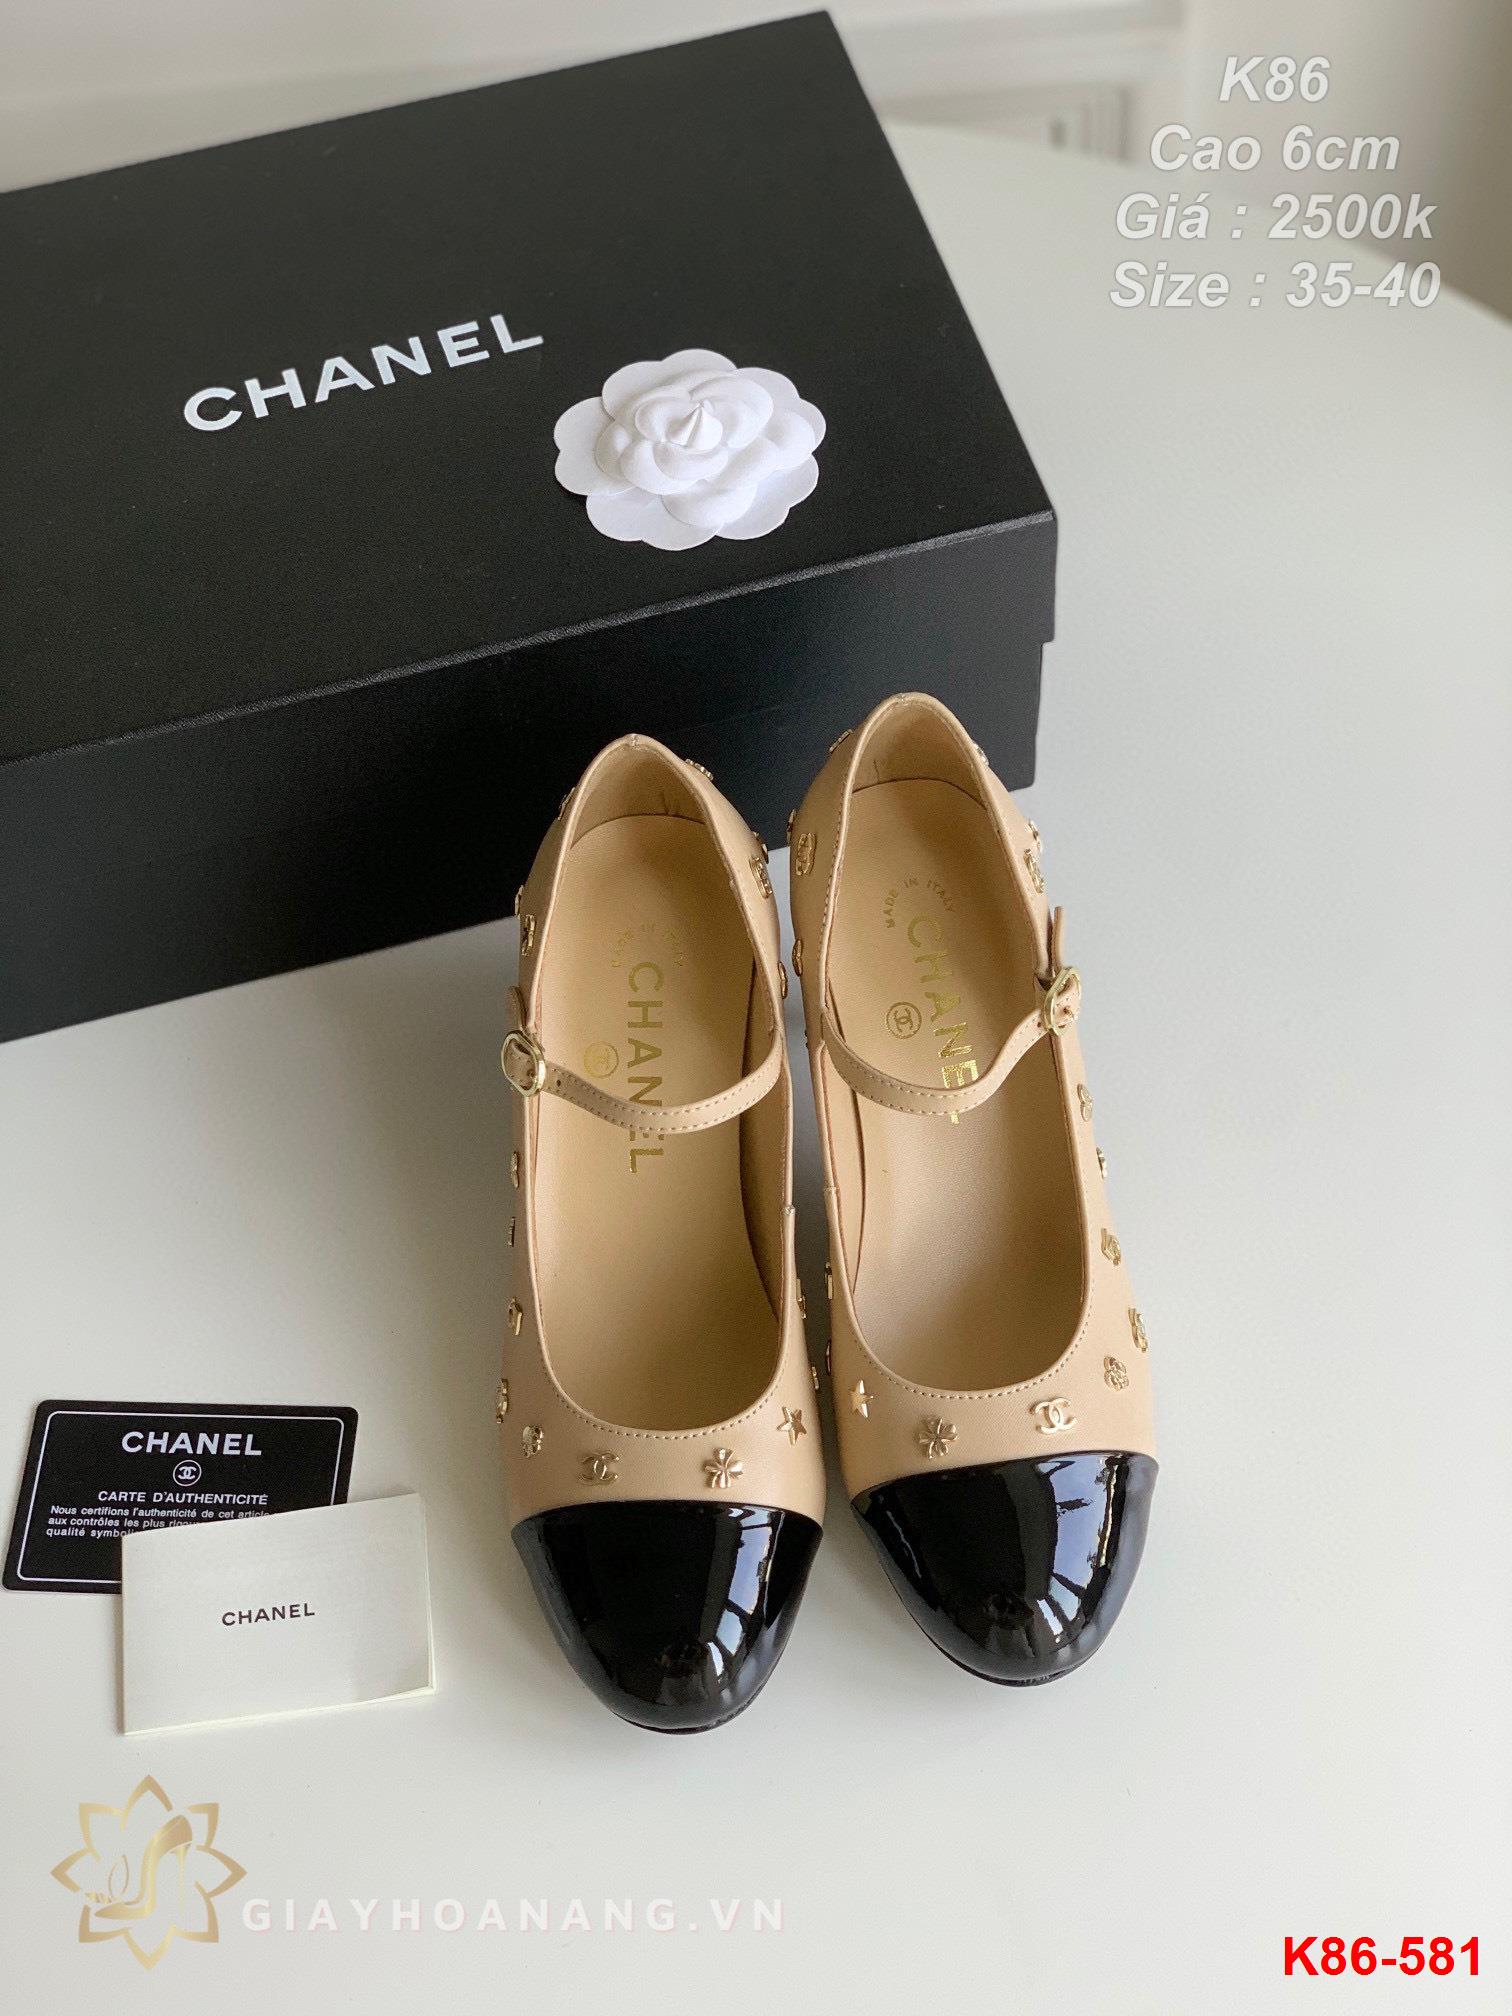 K86-581 Chanel giày cao 6cm siêu cấp